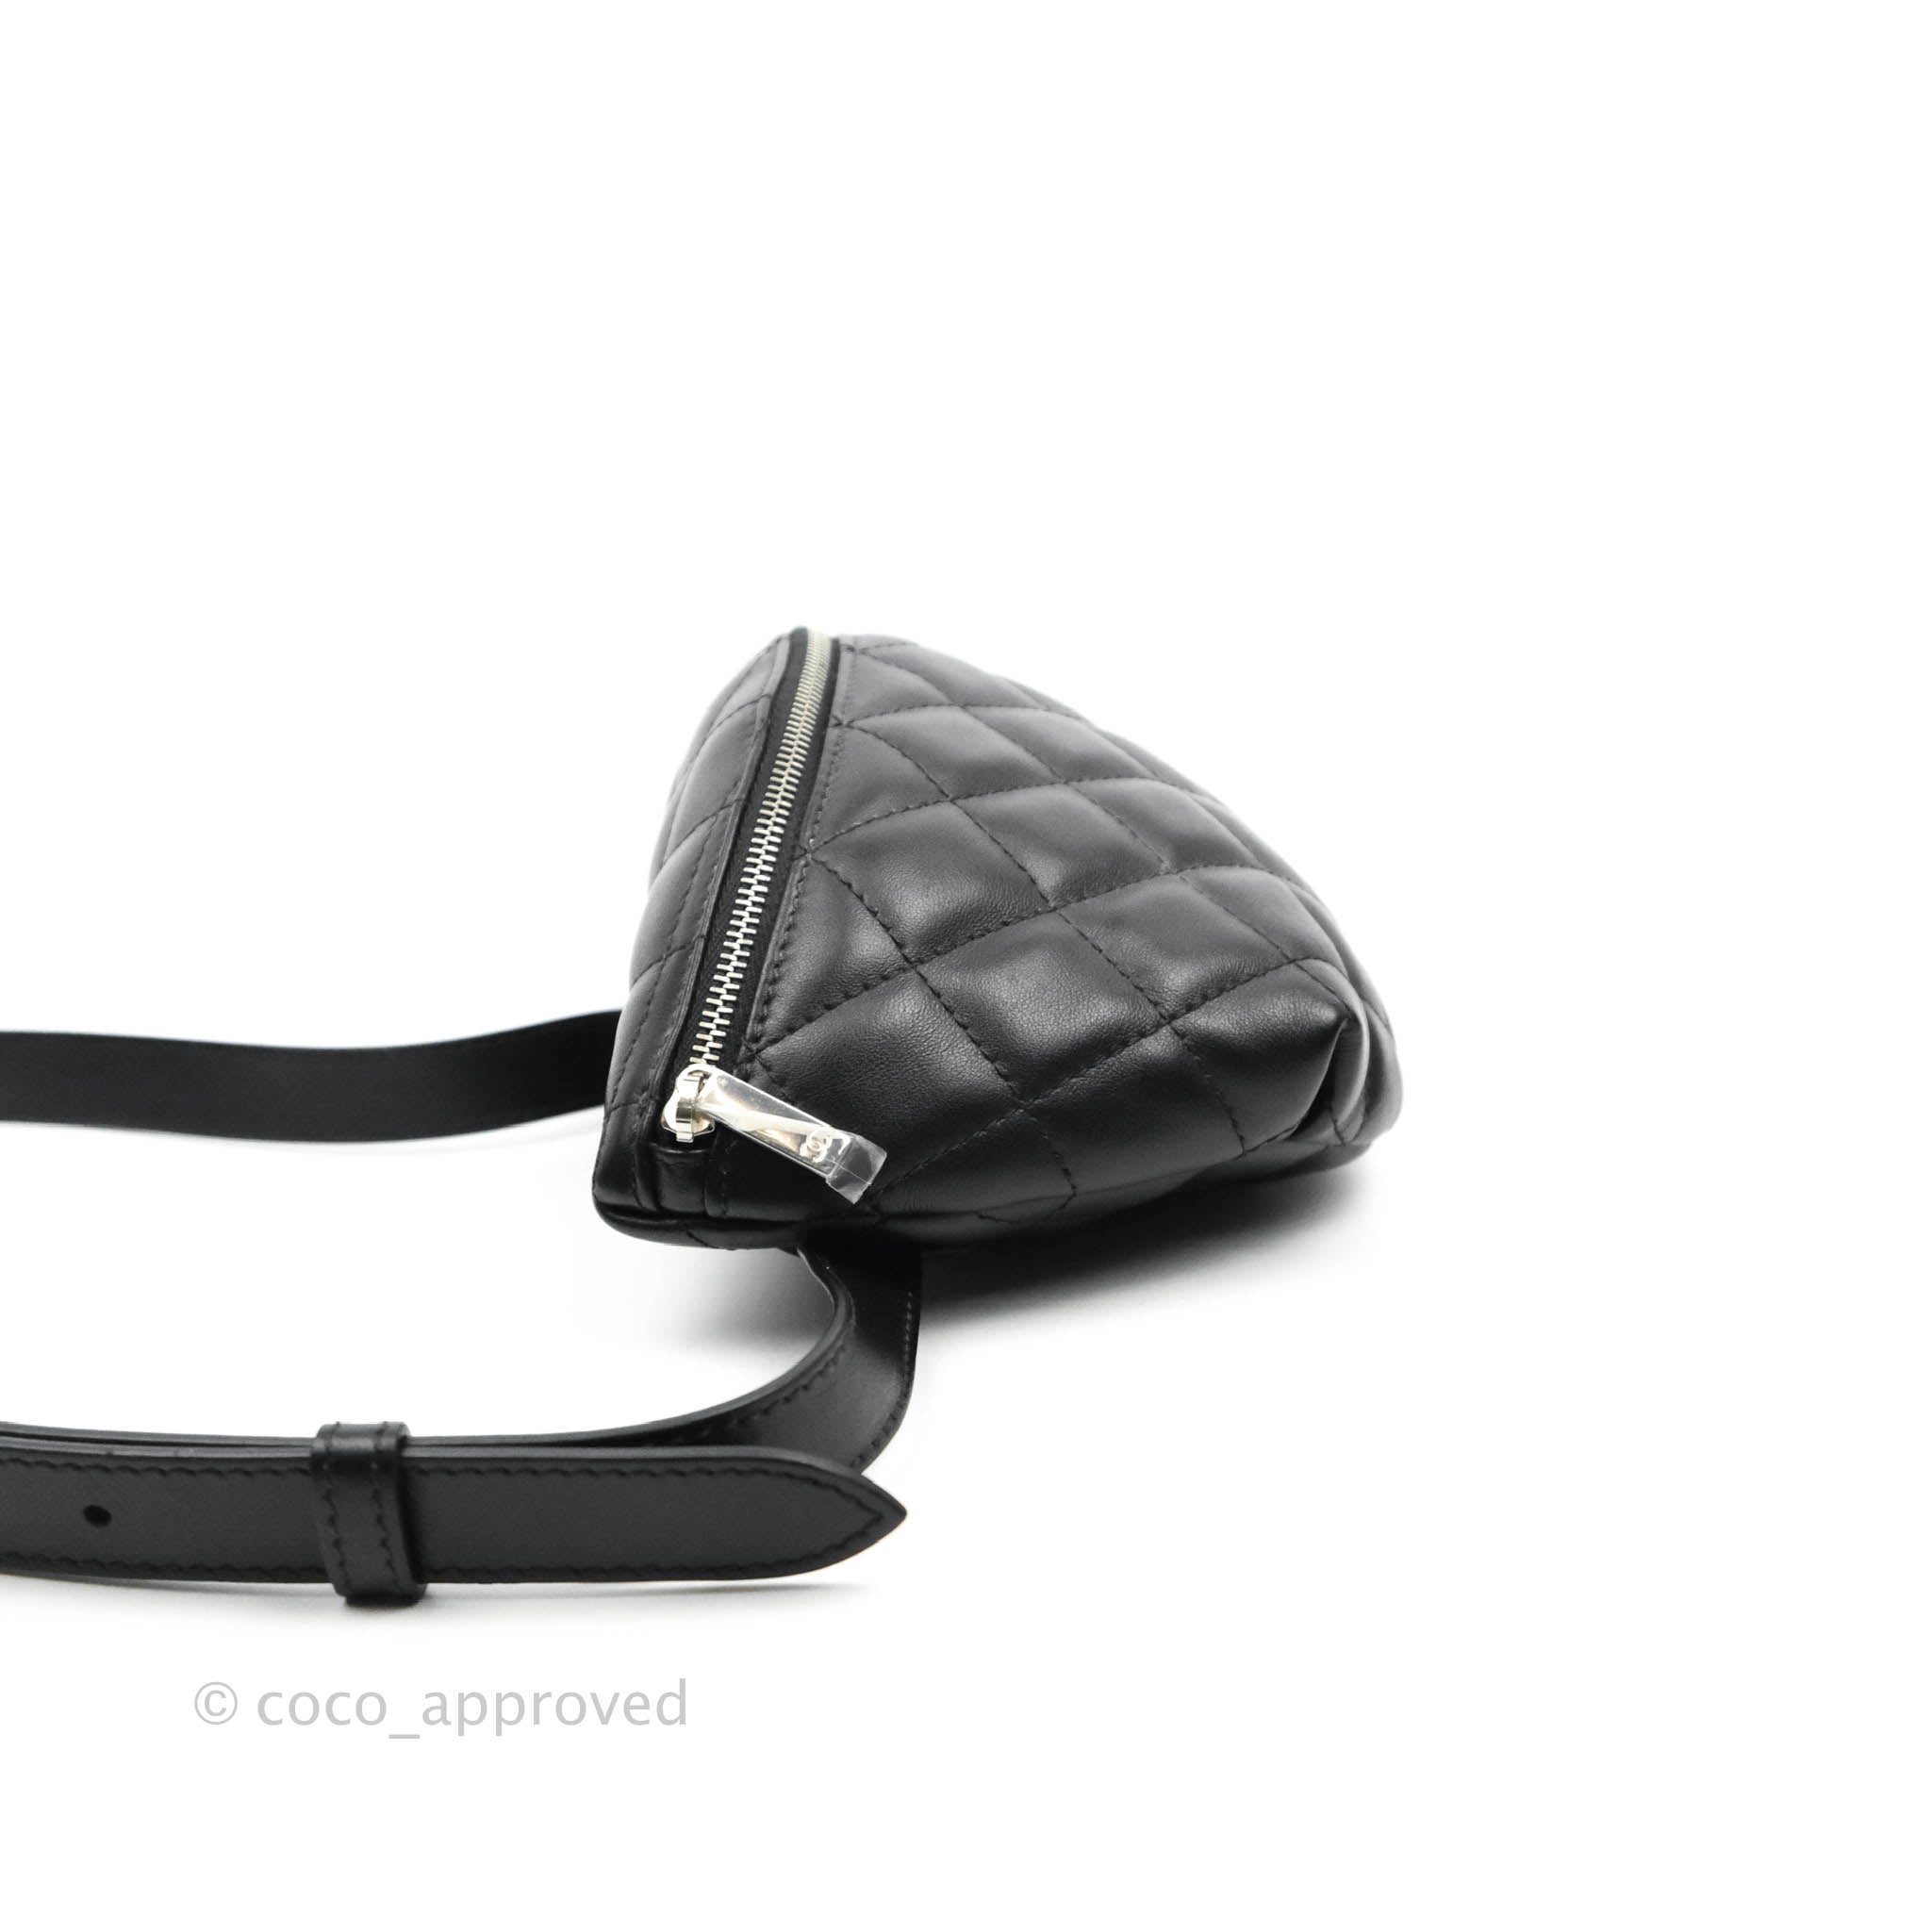 CHANEL Blue Nylon Exterior Bags & Handbags for Women, Authenticity  Guaranteed